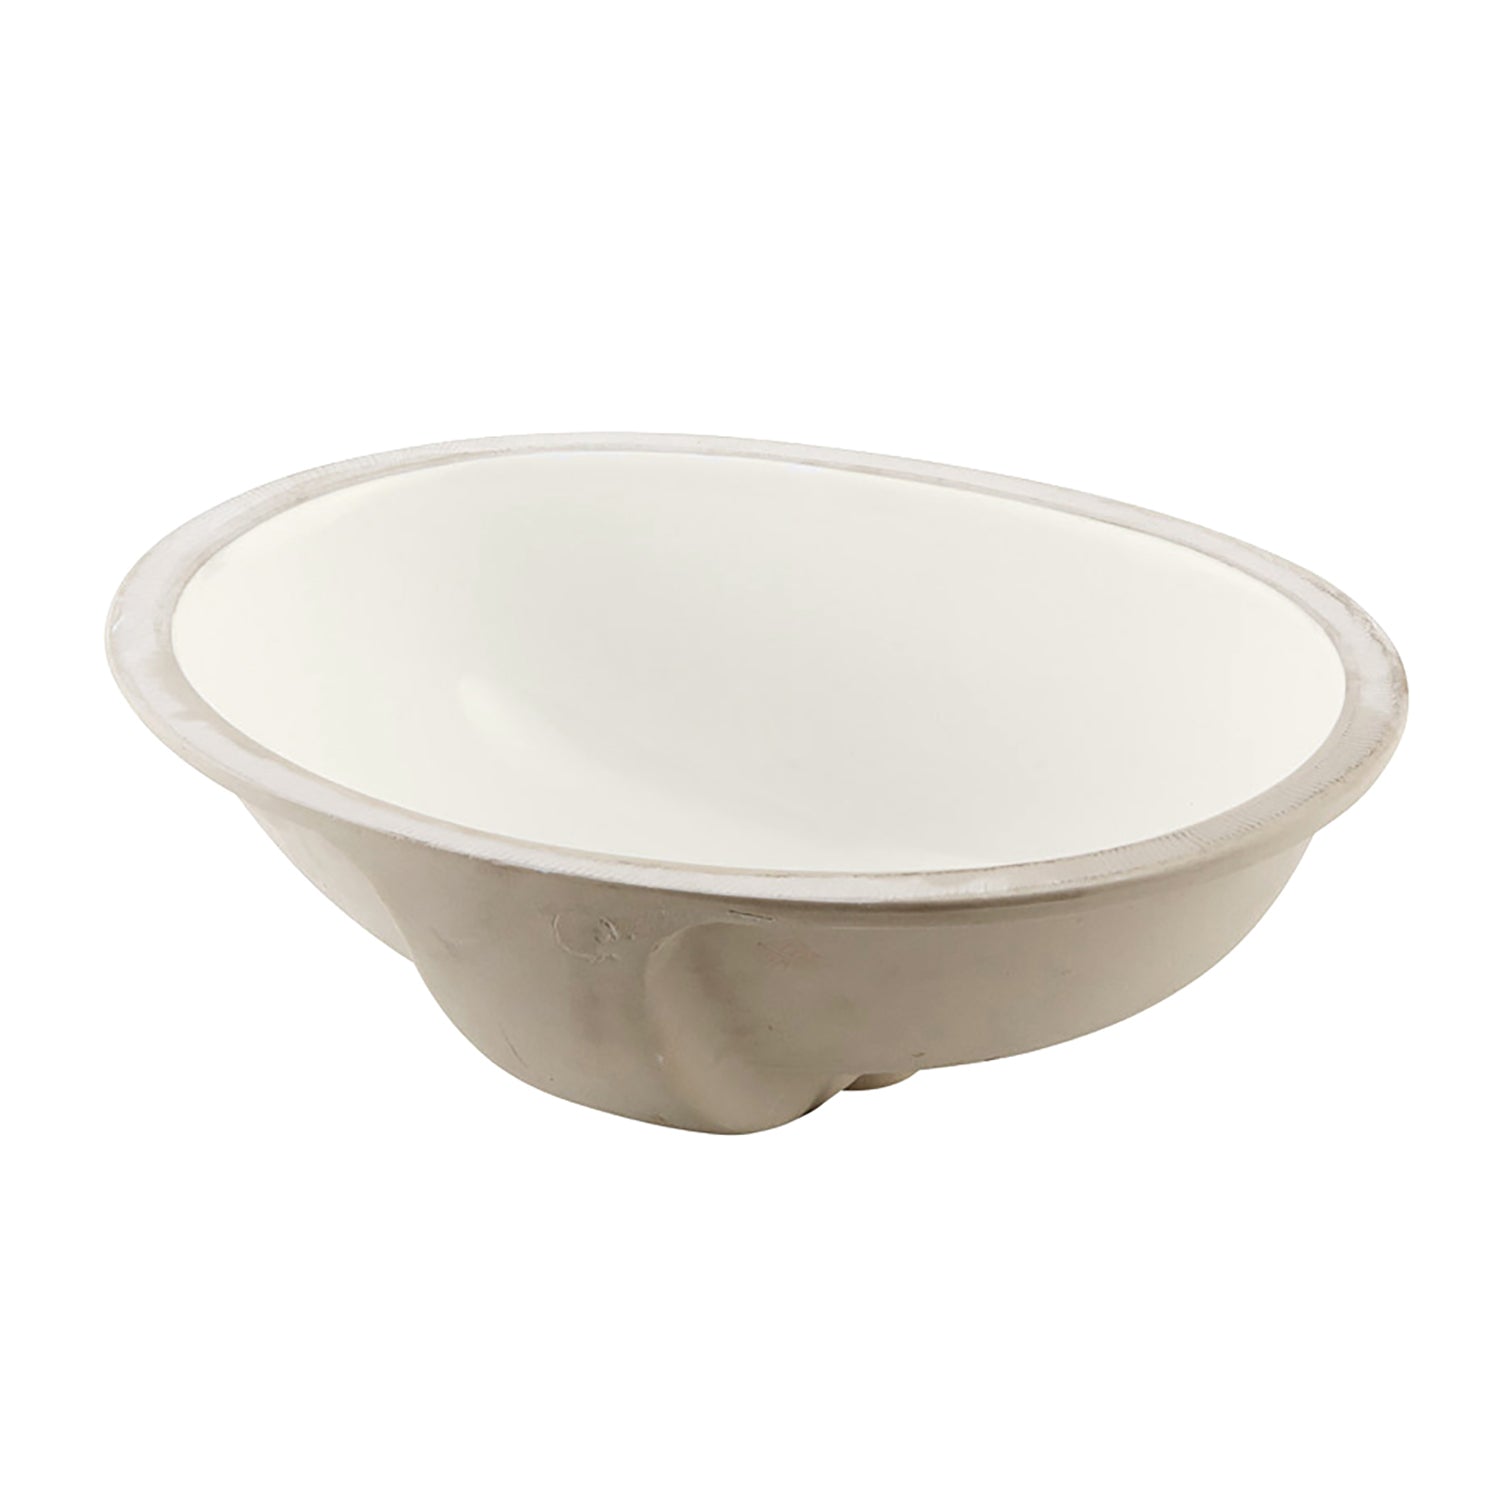 DAX Ceramic Oval Single Bowl Undermount Bathroom Sink, Ivory Finish, 18 x 14-3/4 x 7-1/2 Inches (BSN-205B-I)